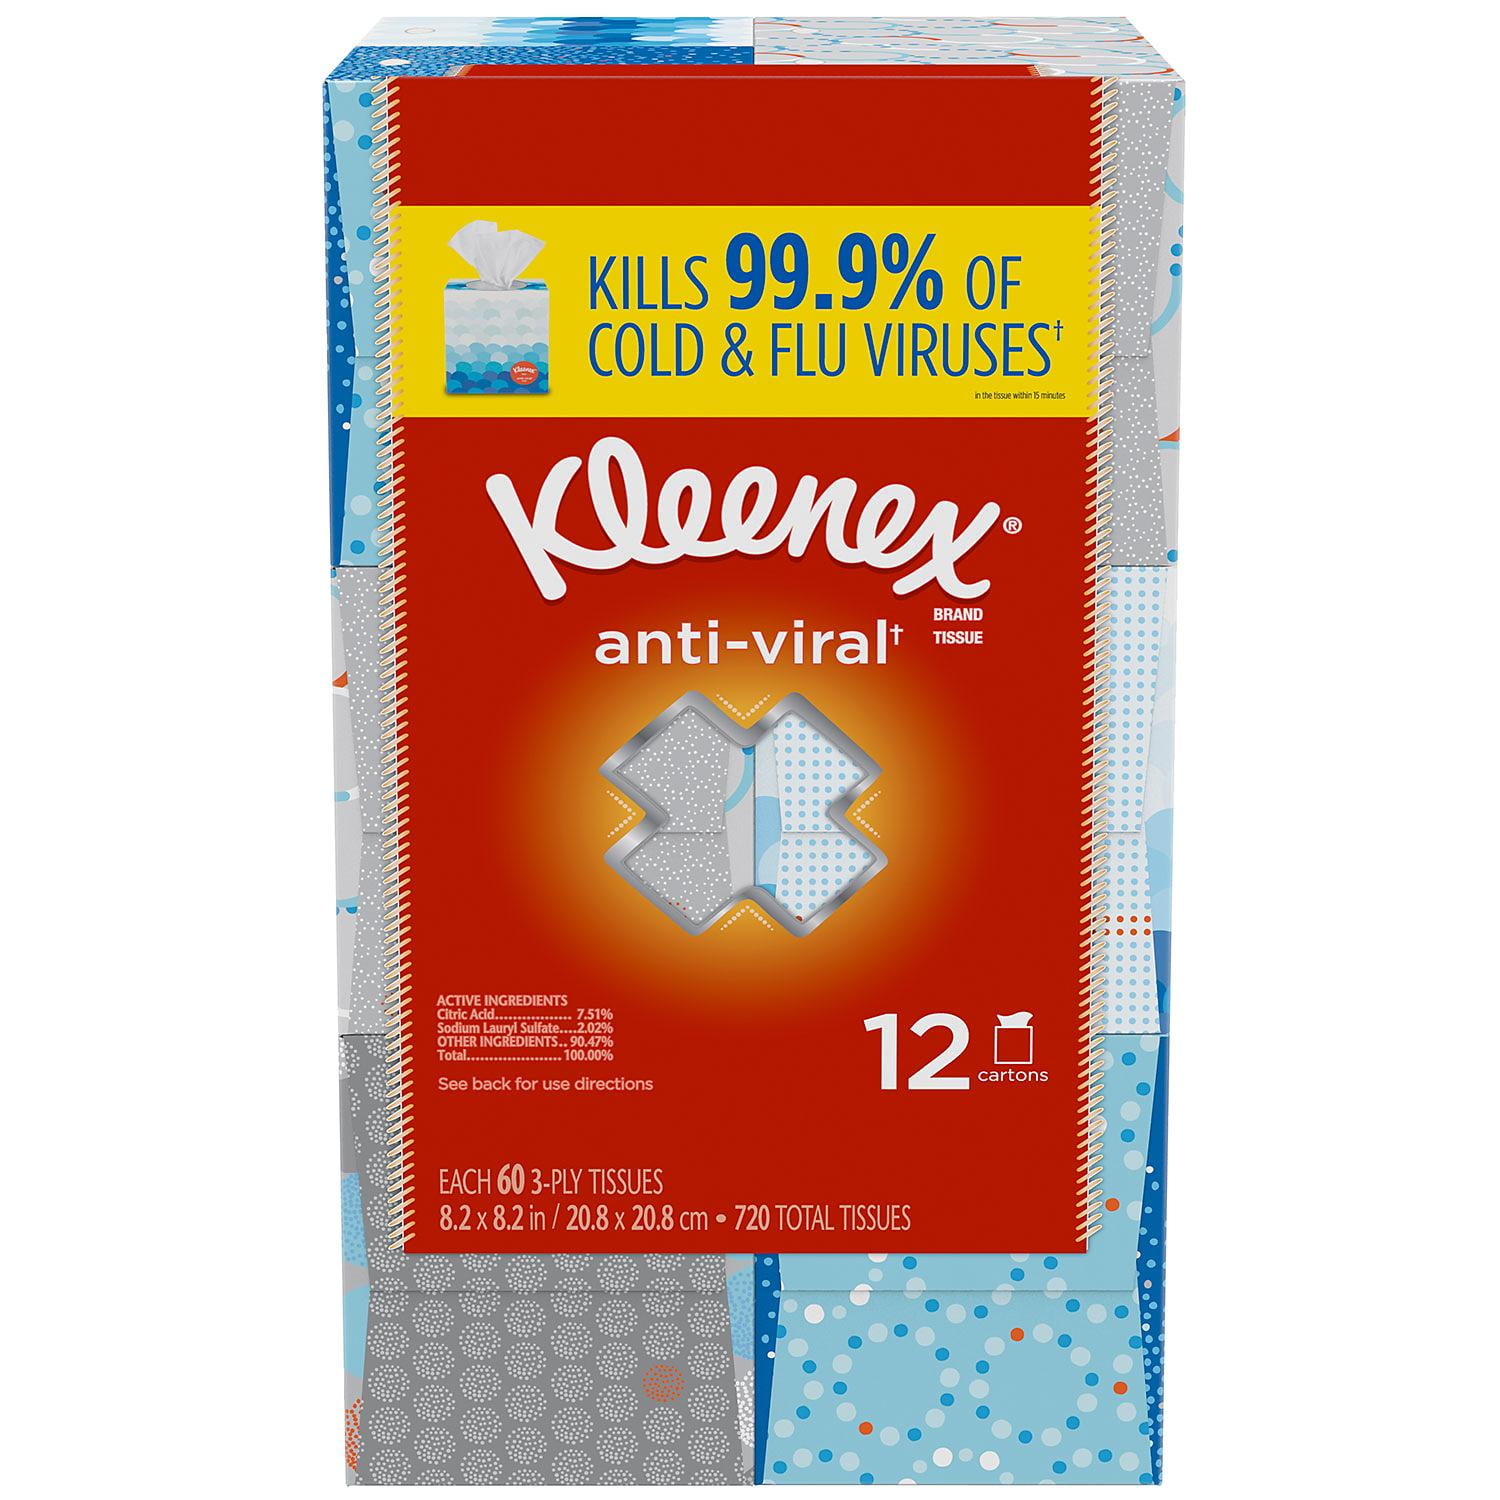 Details about   Kleenex Anti-Viral Facial Tissues 240 Tissues 60 Tissues per Box 4 Cube Boxes 